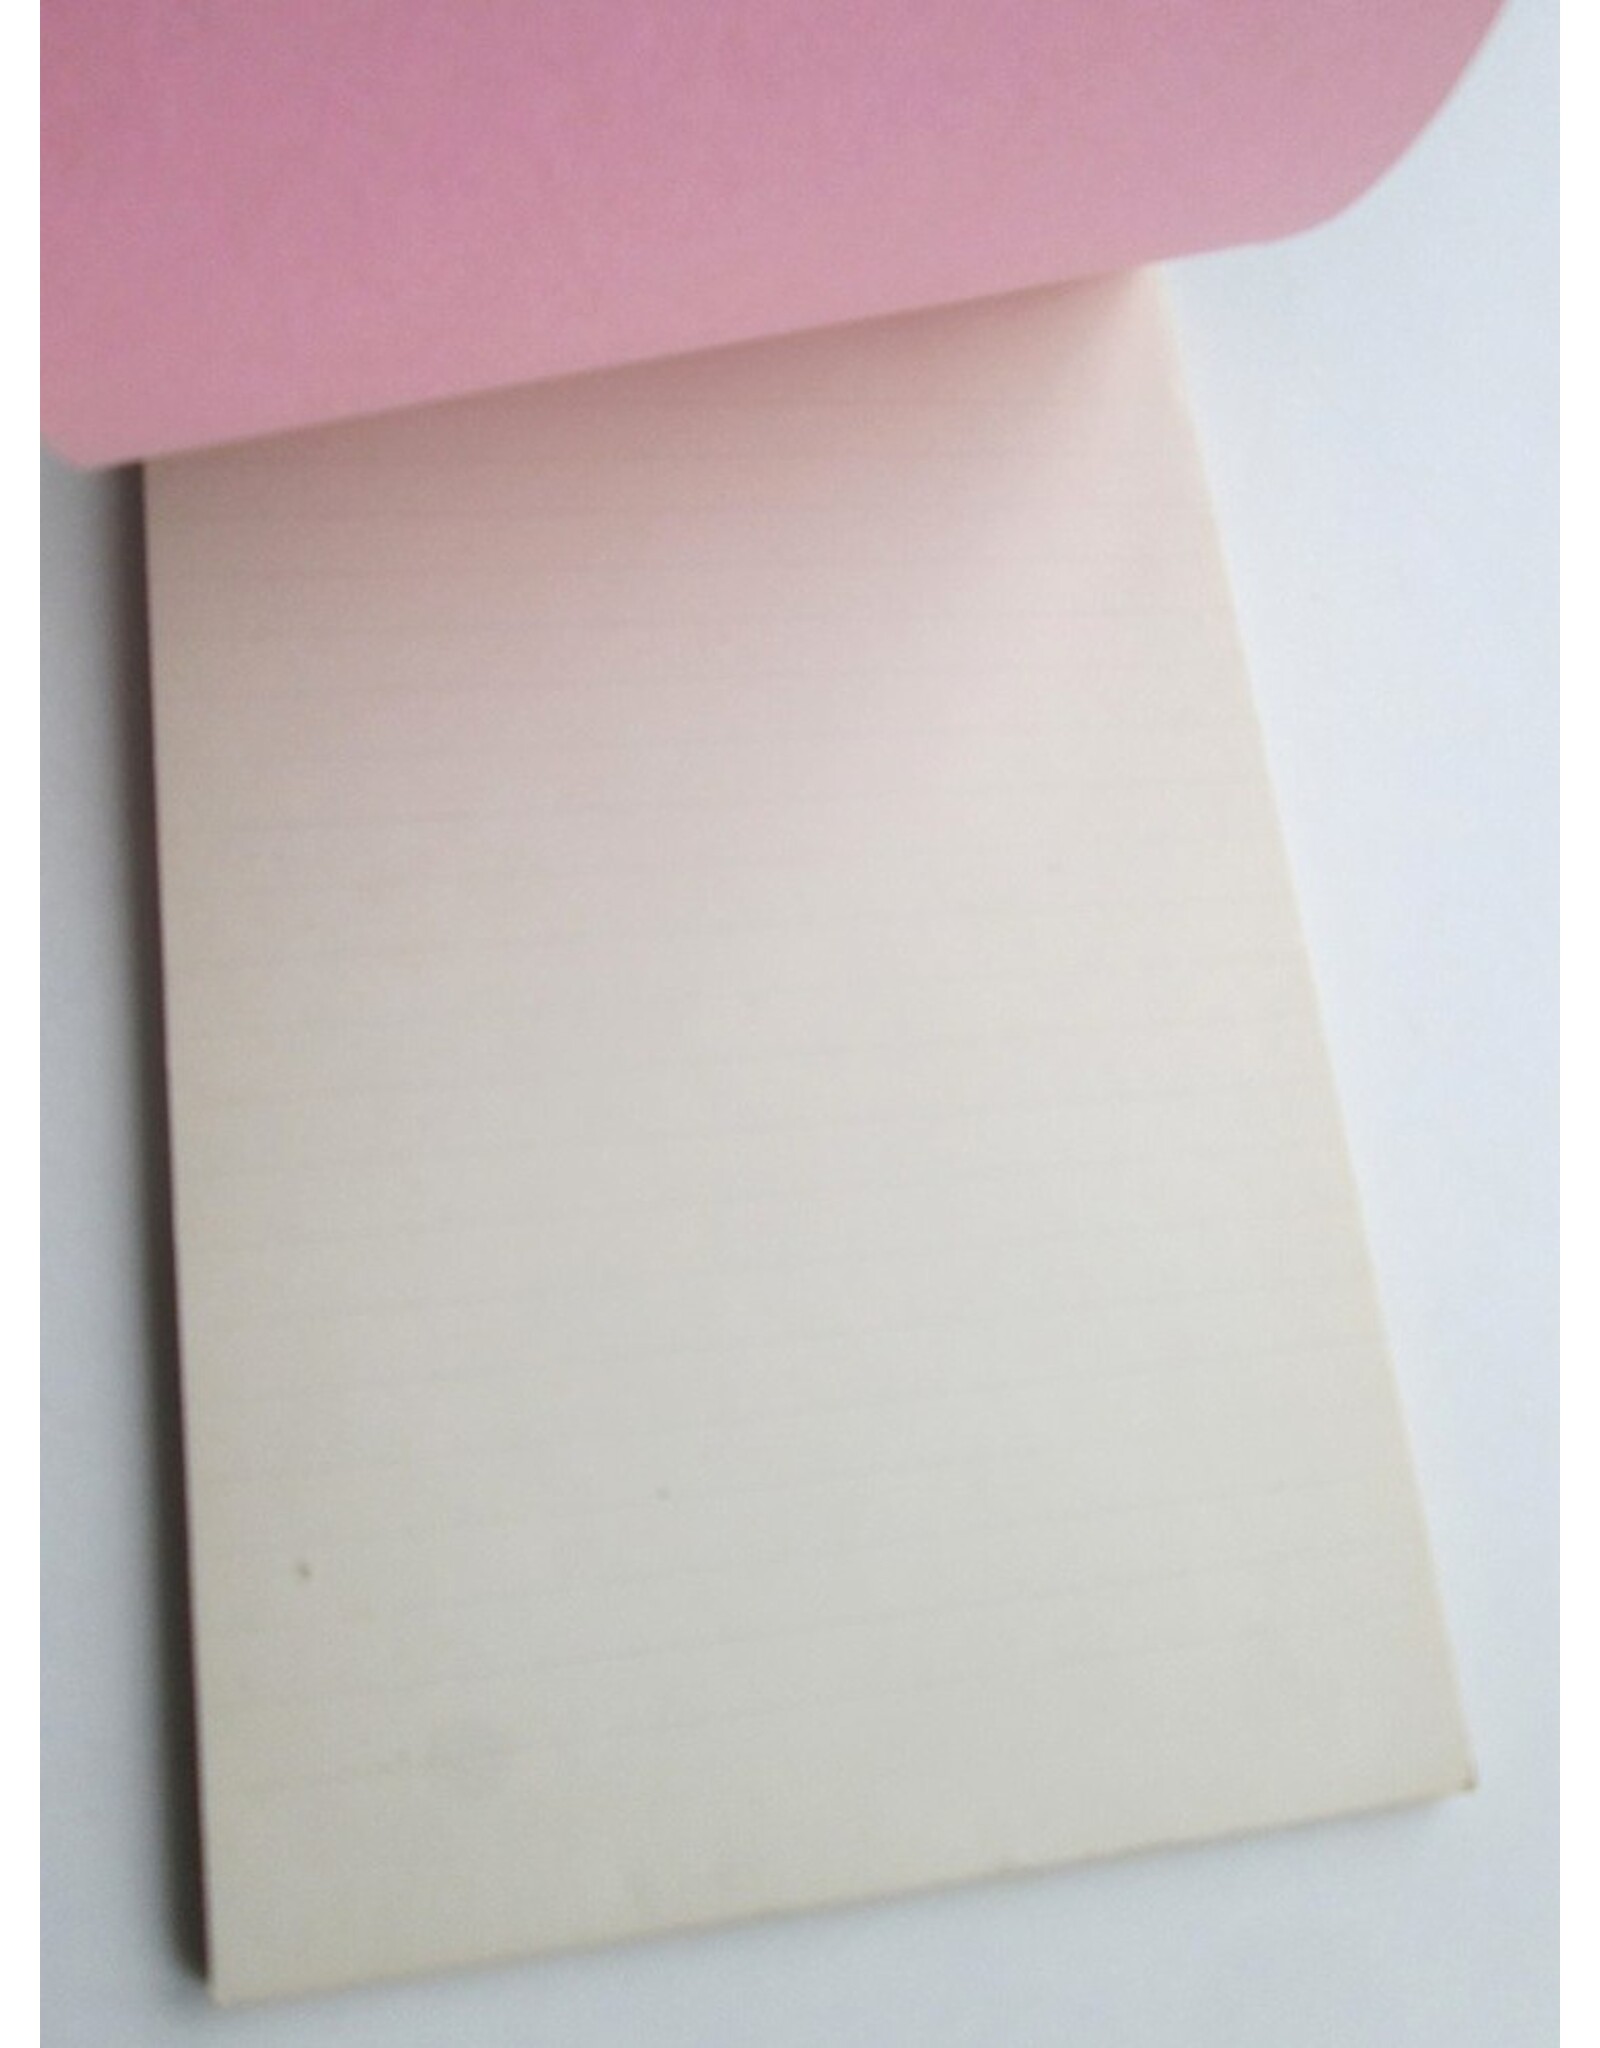 [Efemera] Schrijftafelblok. 50 vel gelinieerd schrijfpapier